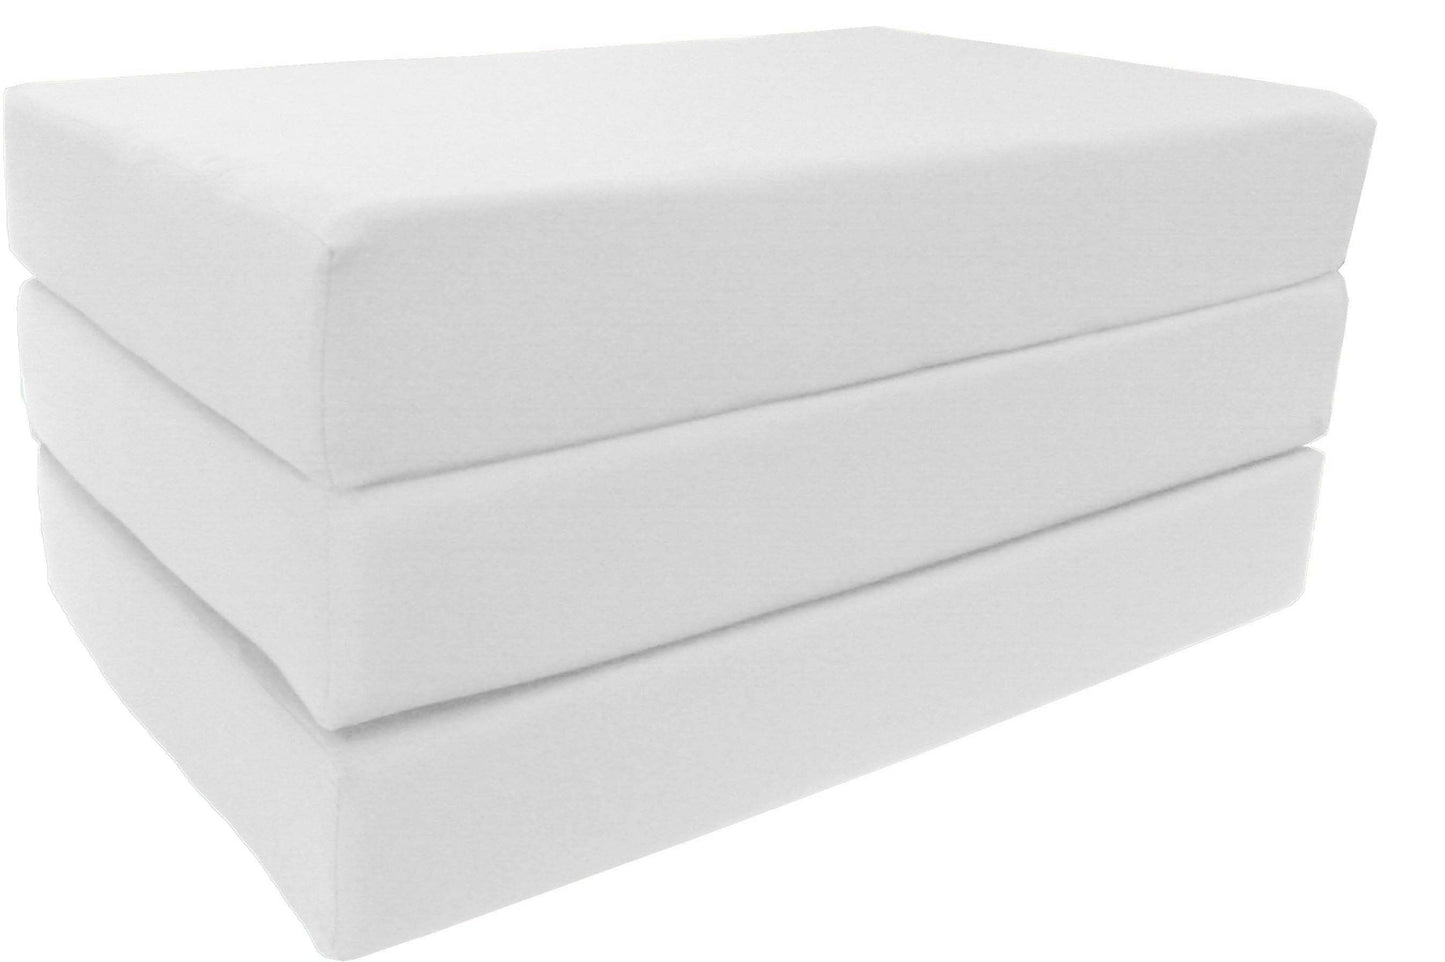 Tri Fold Foam Beds, Shikibutons, Foldable Ottoman Mattresses, High Foam Density 1.8 lbs